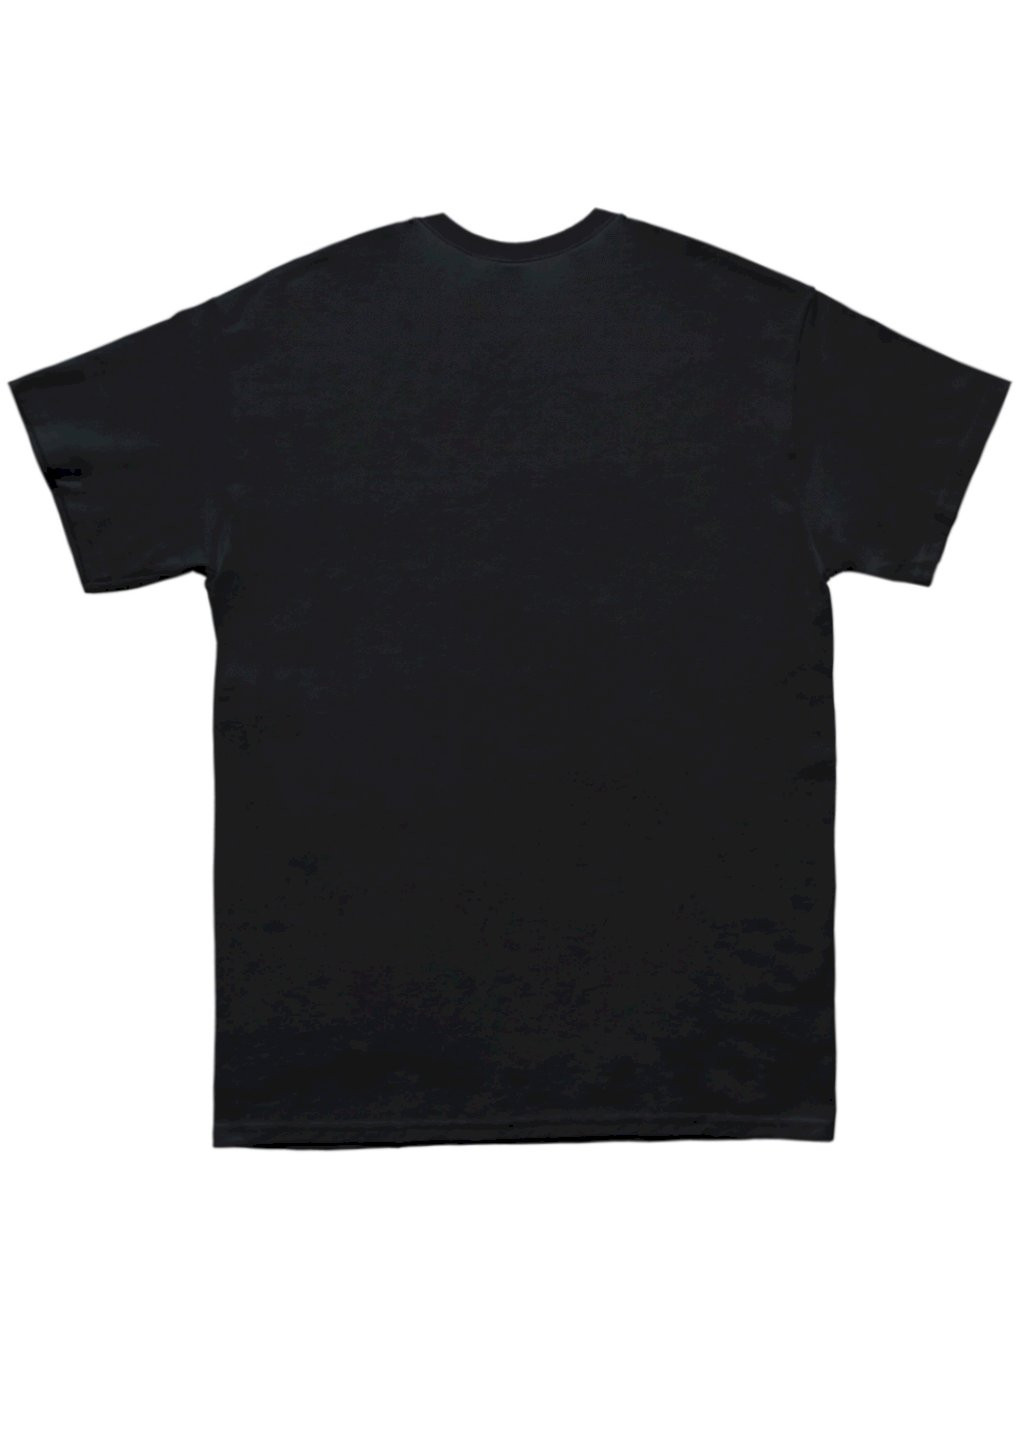 Черная футболка мужская черная "the sky has no limit" Trace of Space